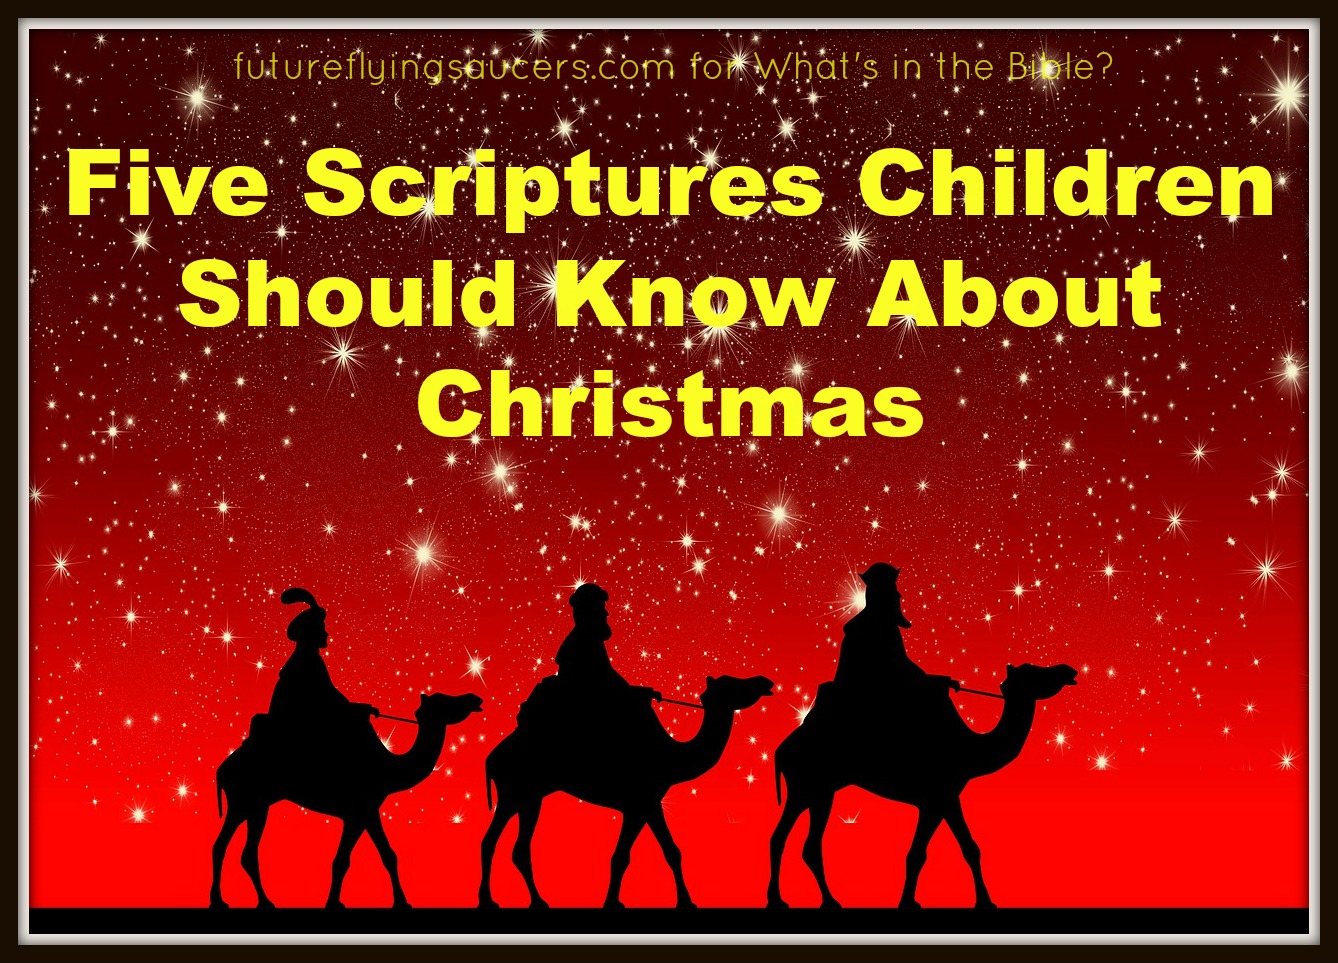 Five Scriptures About Christmas Children Should Know